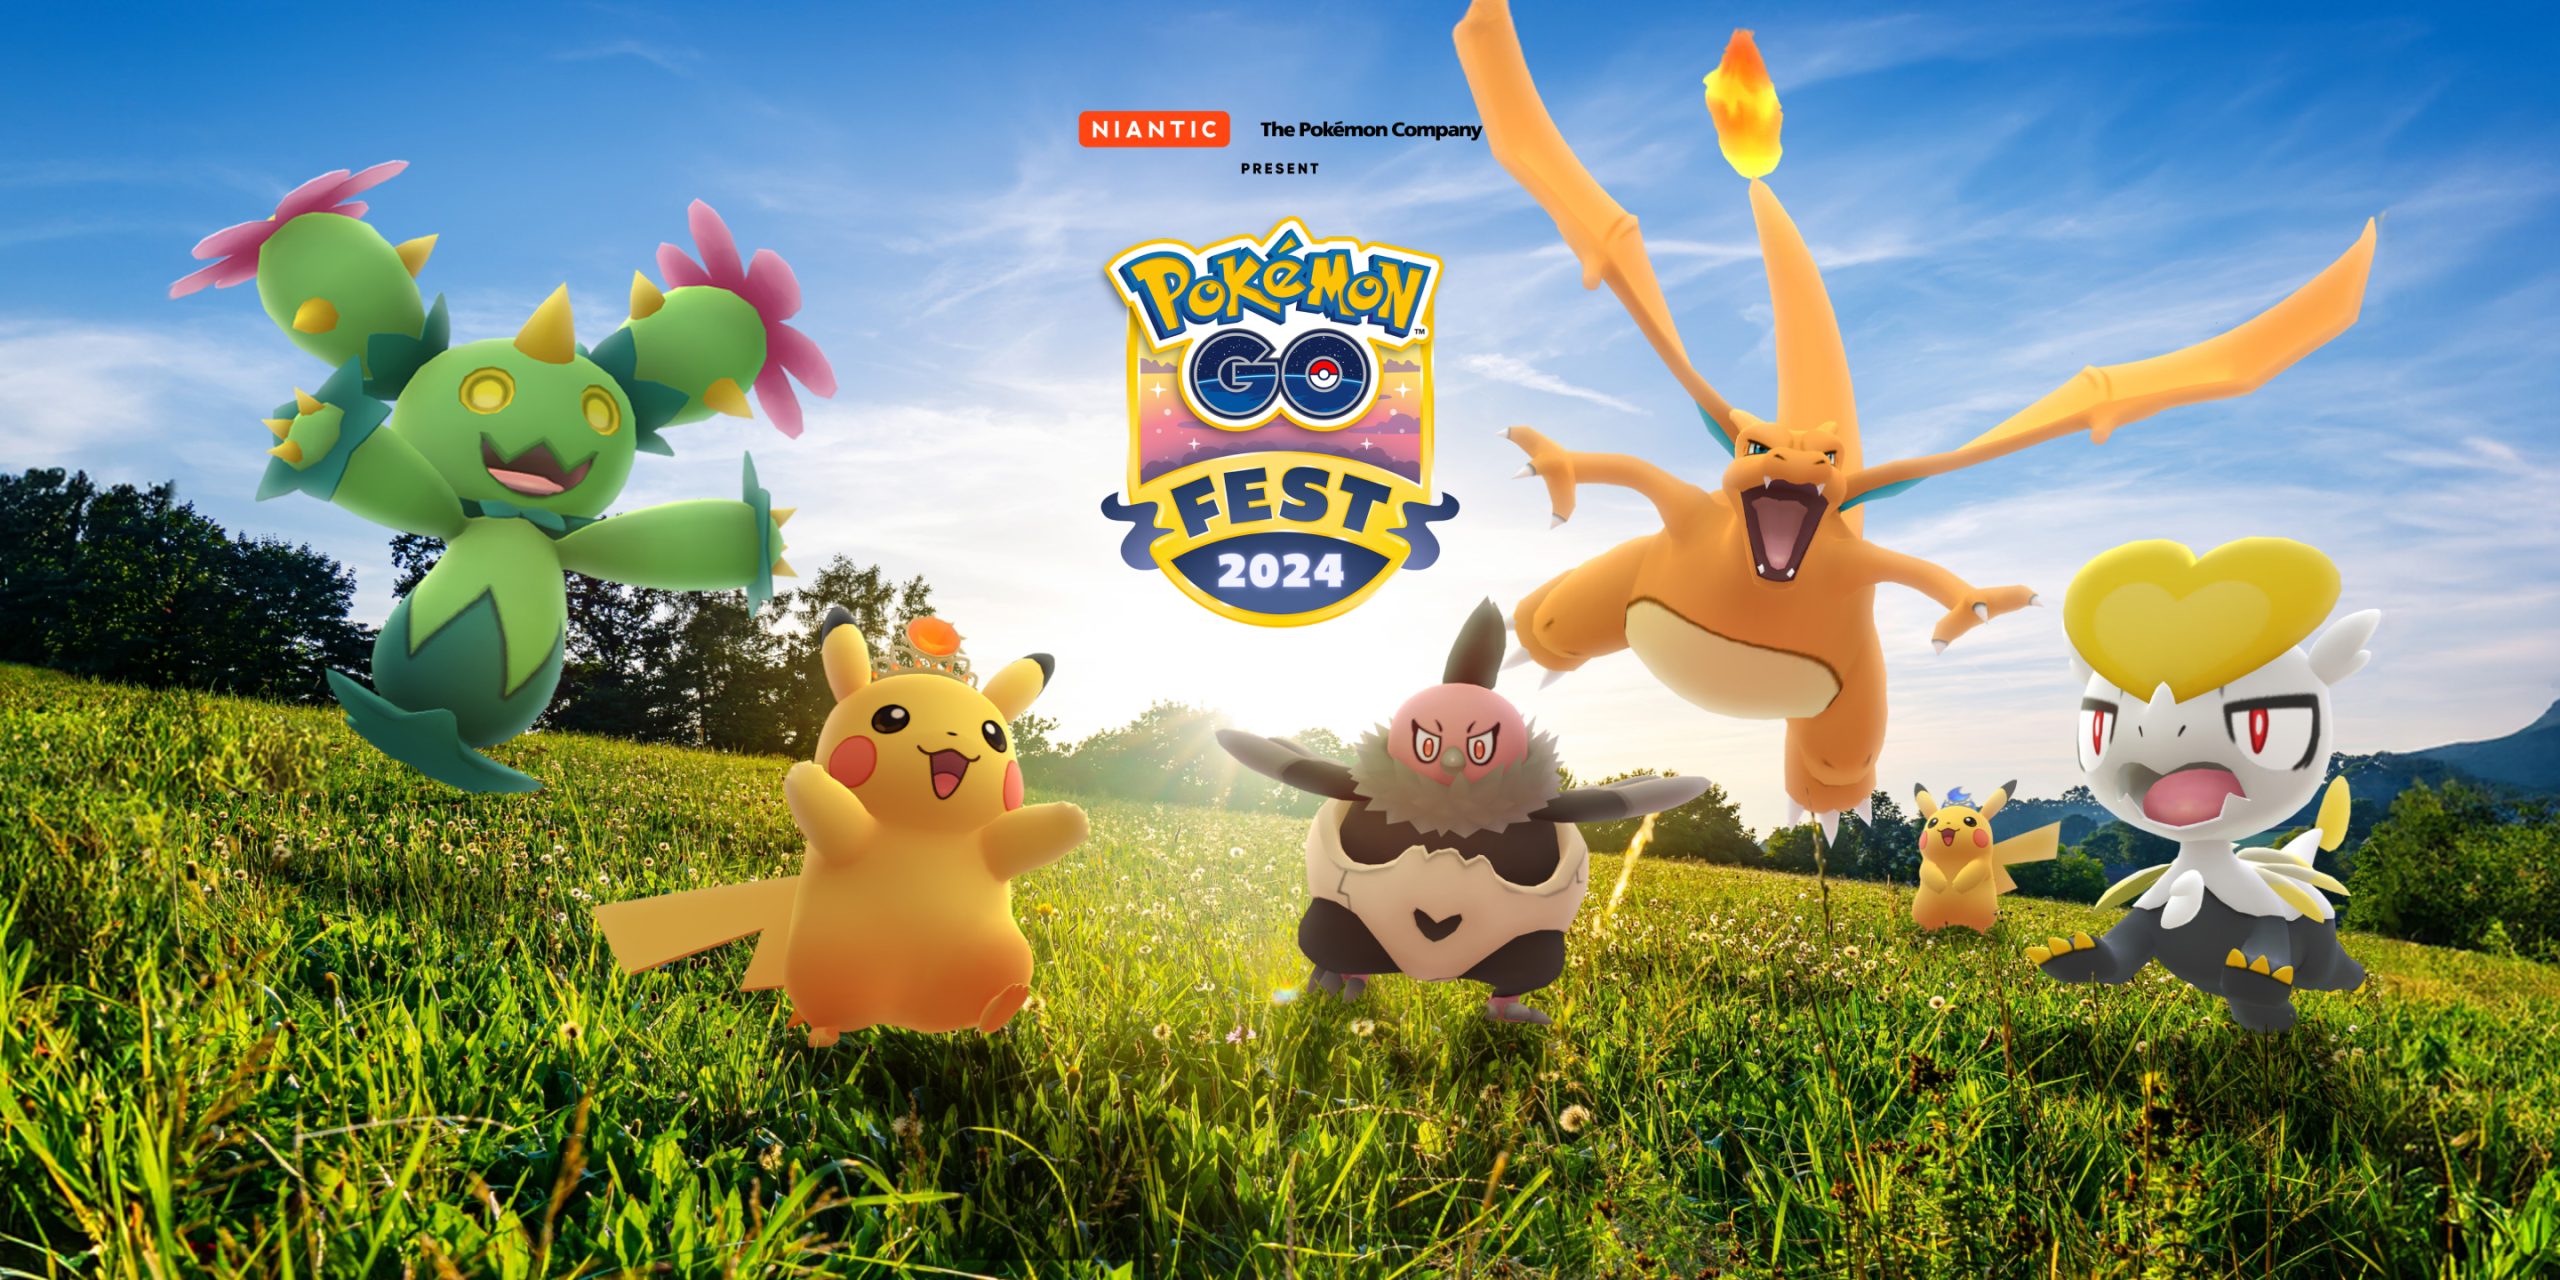 ‘Pokémon Go’ Fest 2024 Heads To Madrid This June